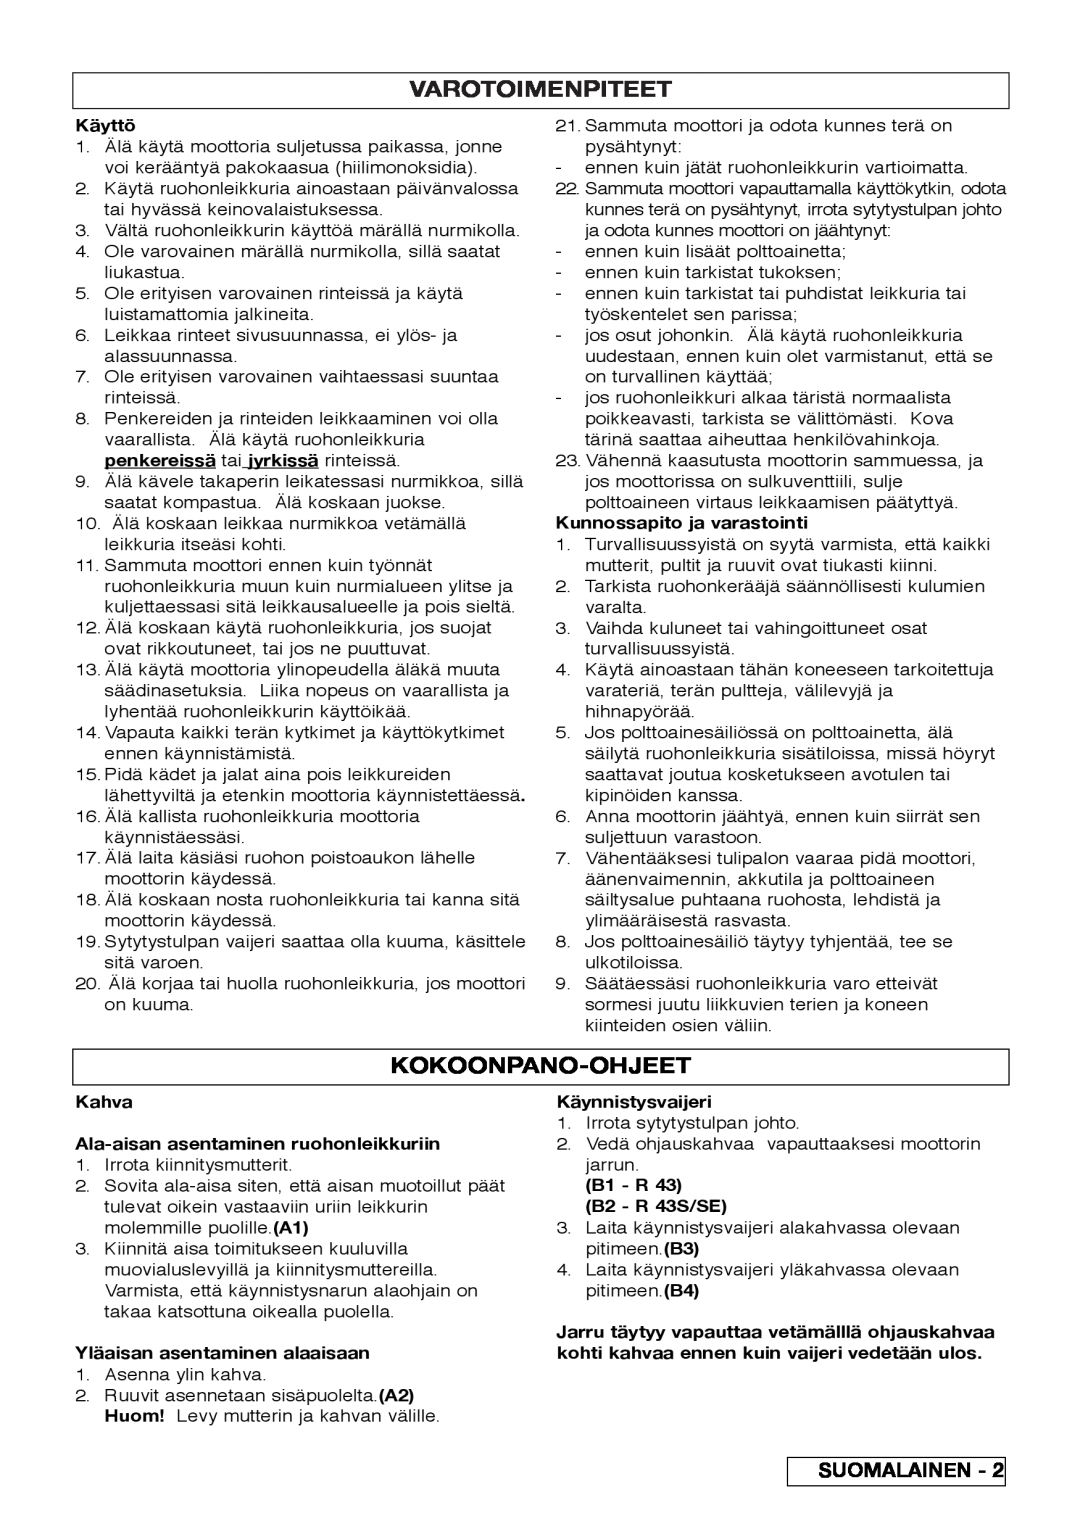 Husqvarna R 43SE manual Varotoimenpiteet, Kokoonpano-Ohjeet 